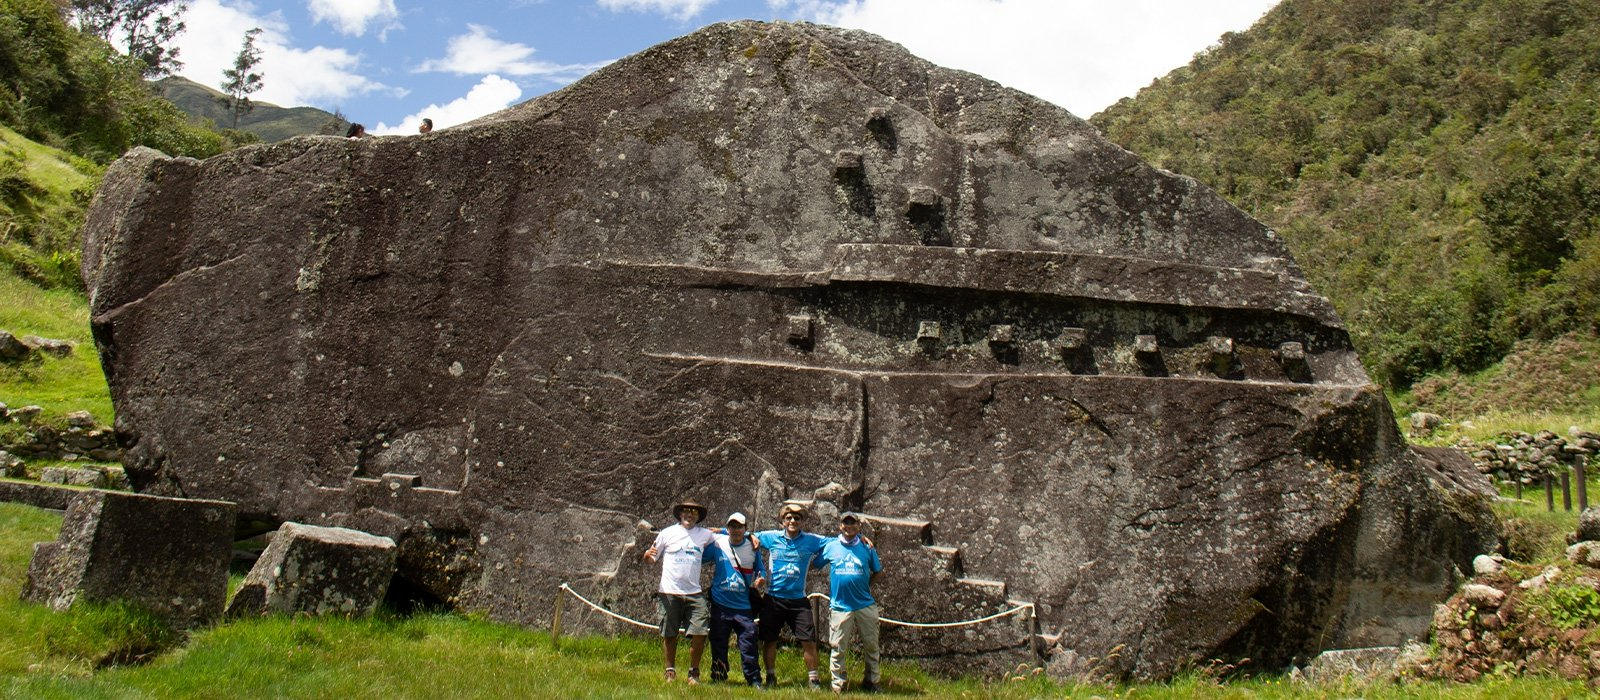 Moonstone Trek to Machu Picchu